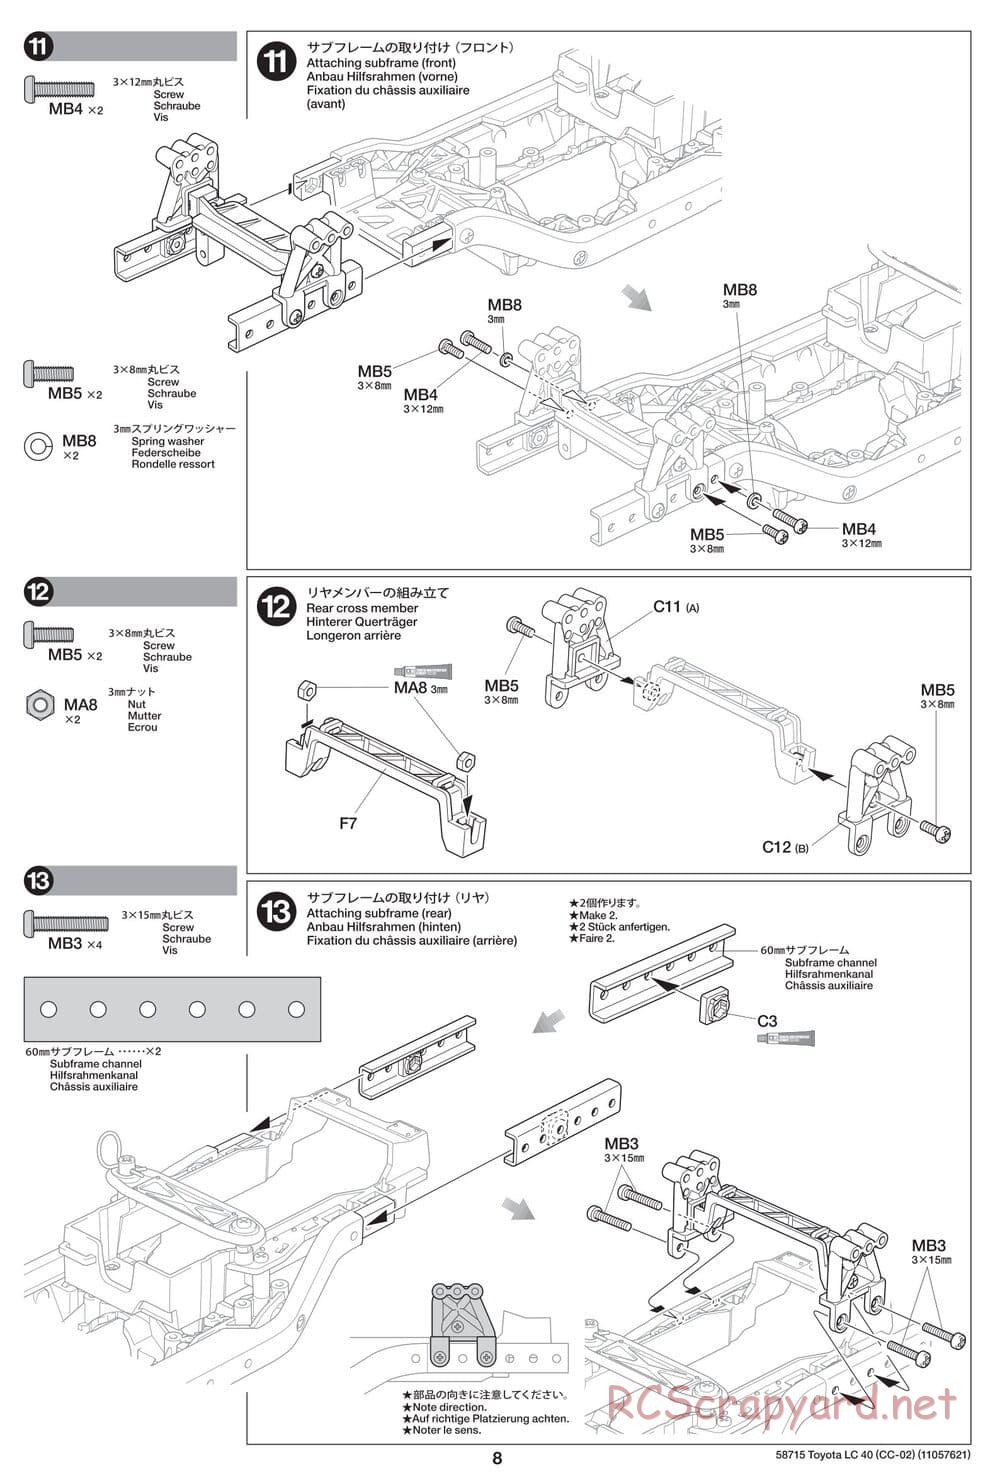 Tamiya - Toyota Land Cruiser 40 - CC-02 Chassis - Manual - Page 8